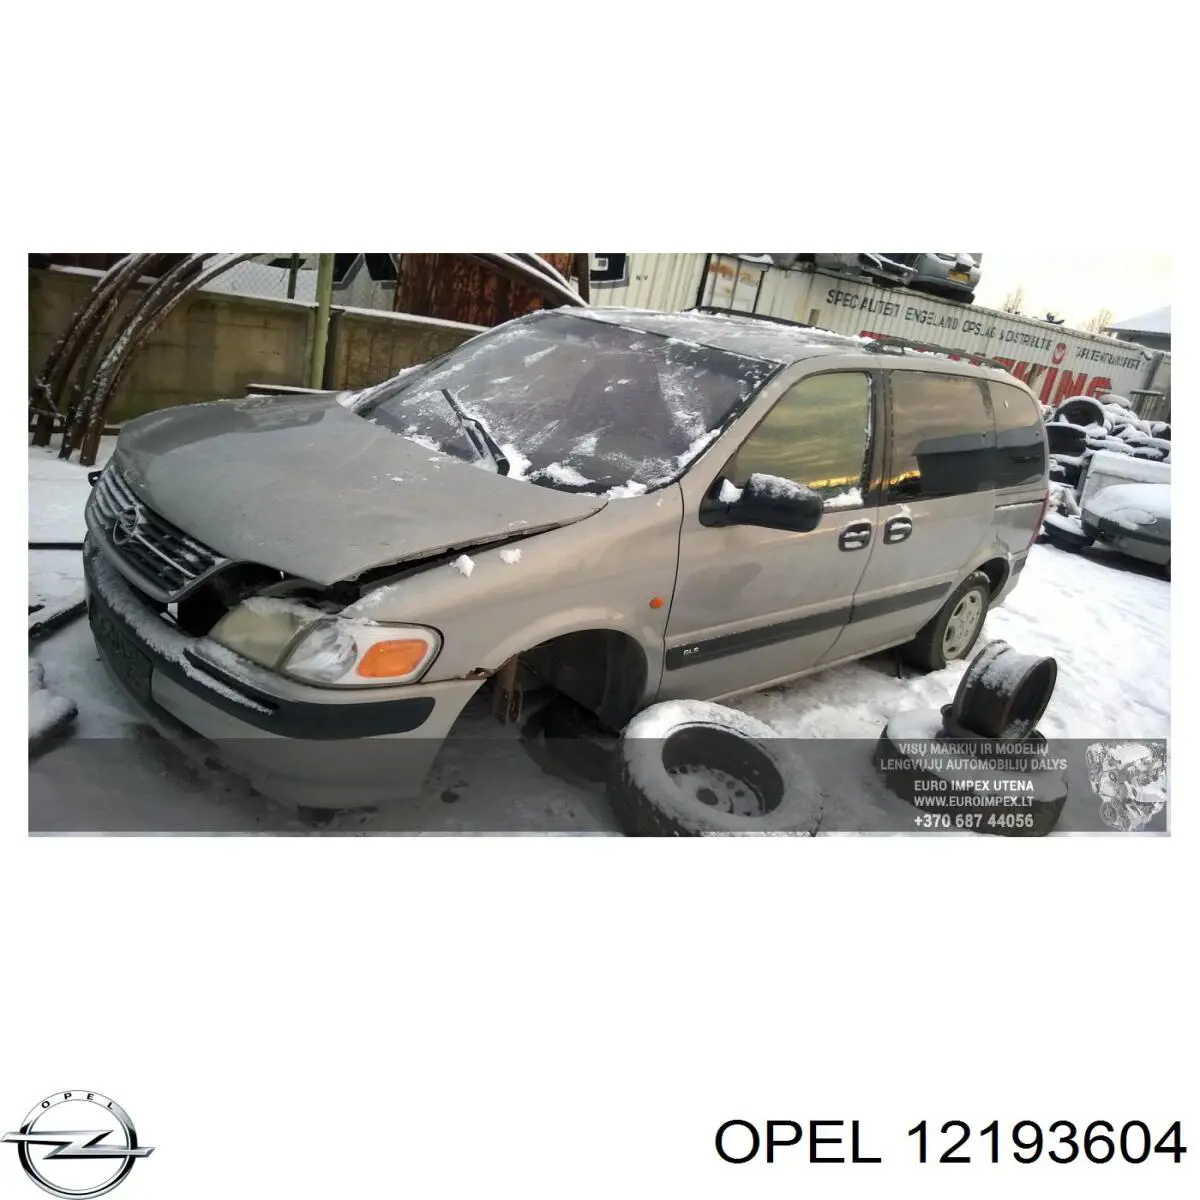 12193604 Opel relé, piloto intermitente